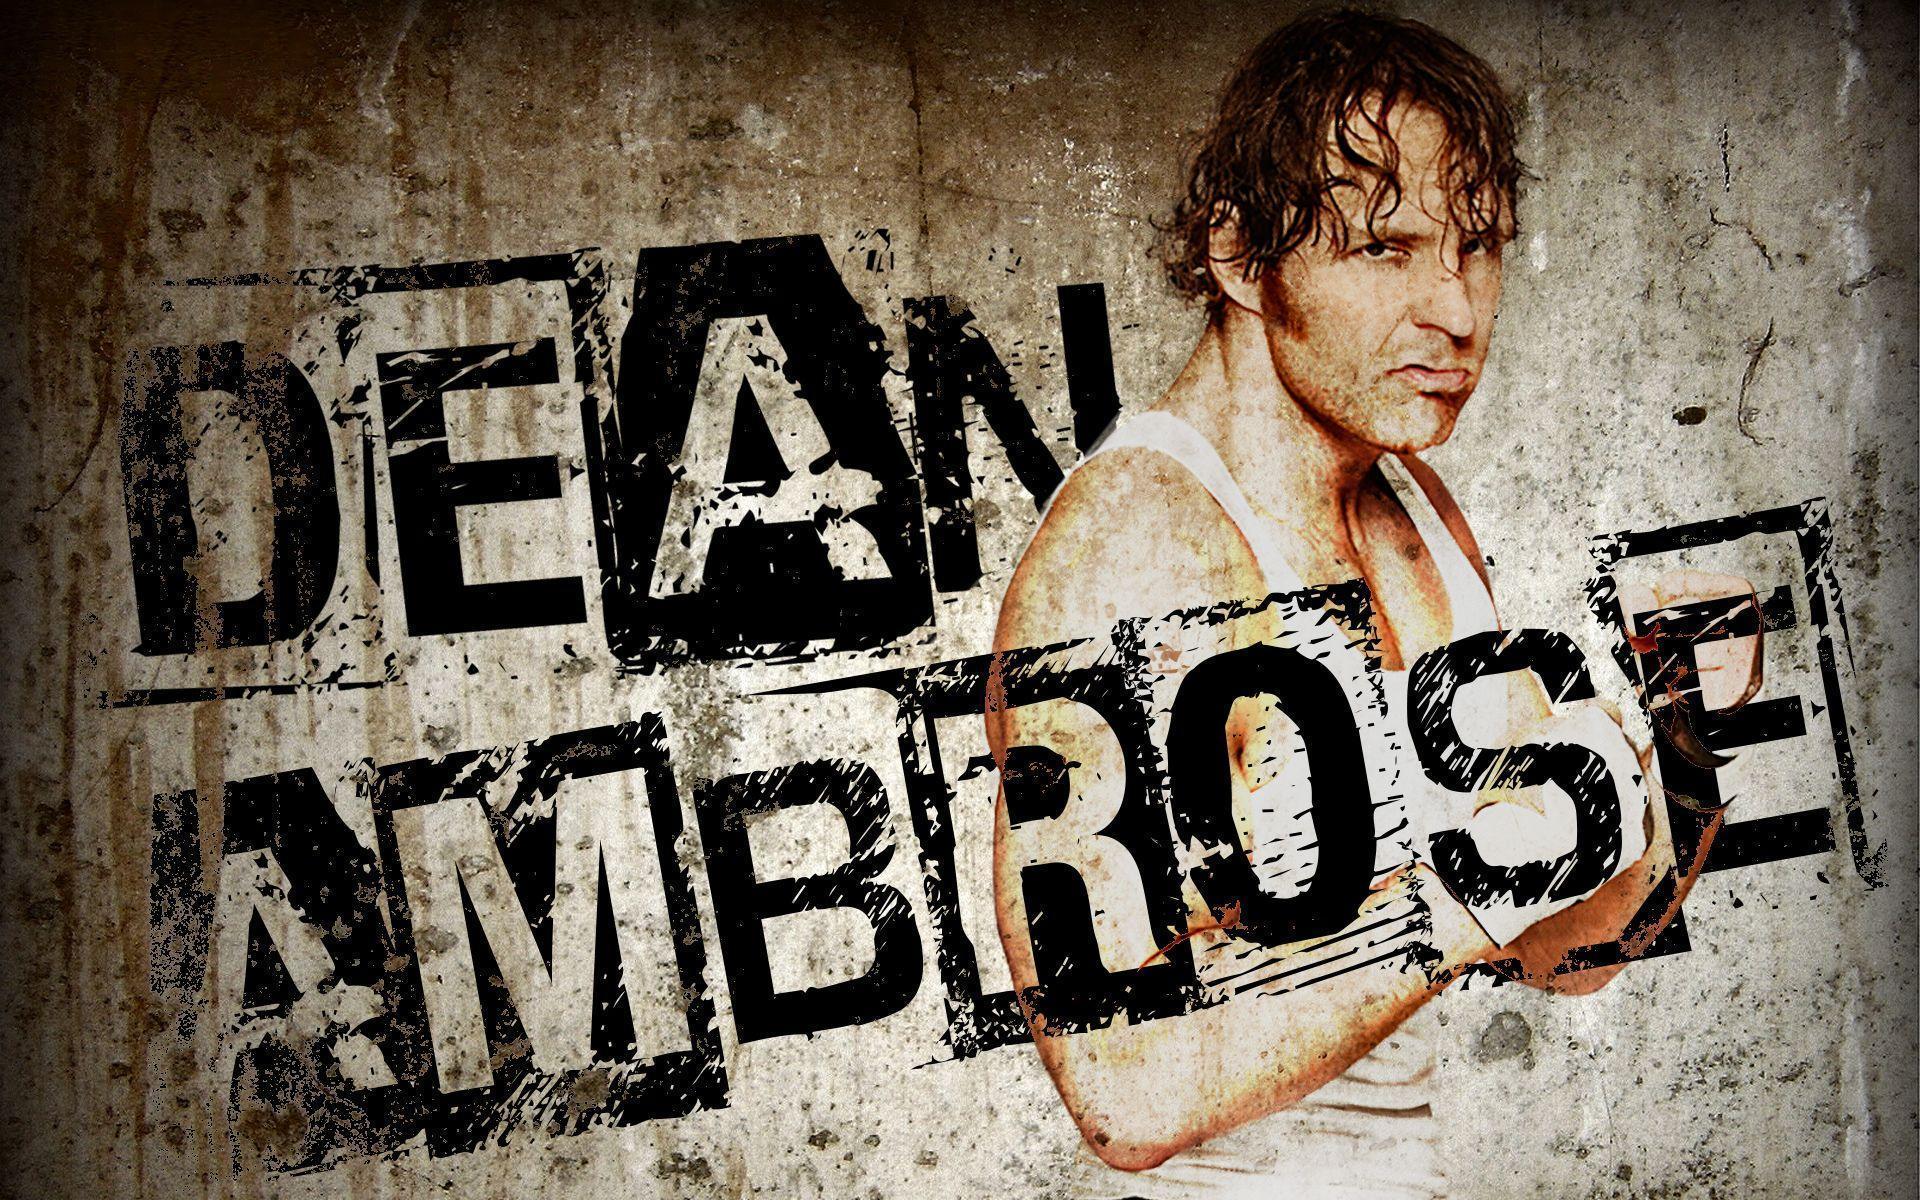 Dean Ambrose WWE Wallpaper 2016